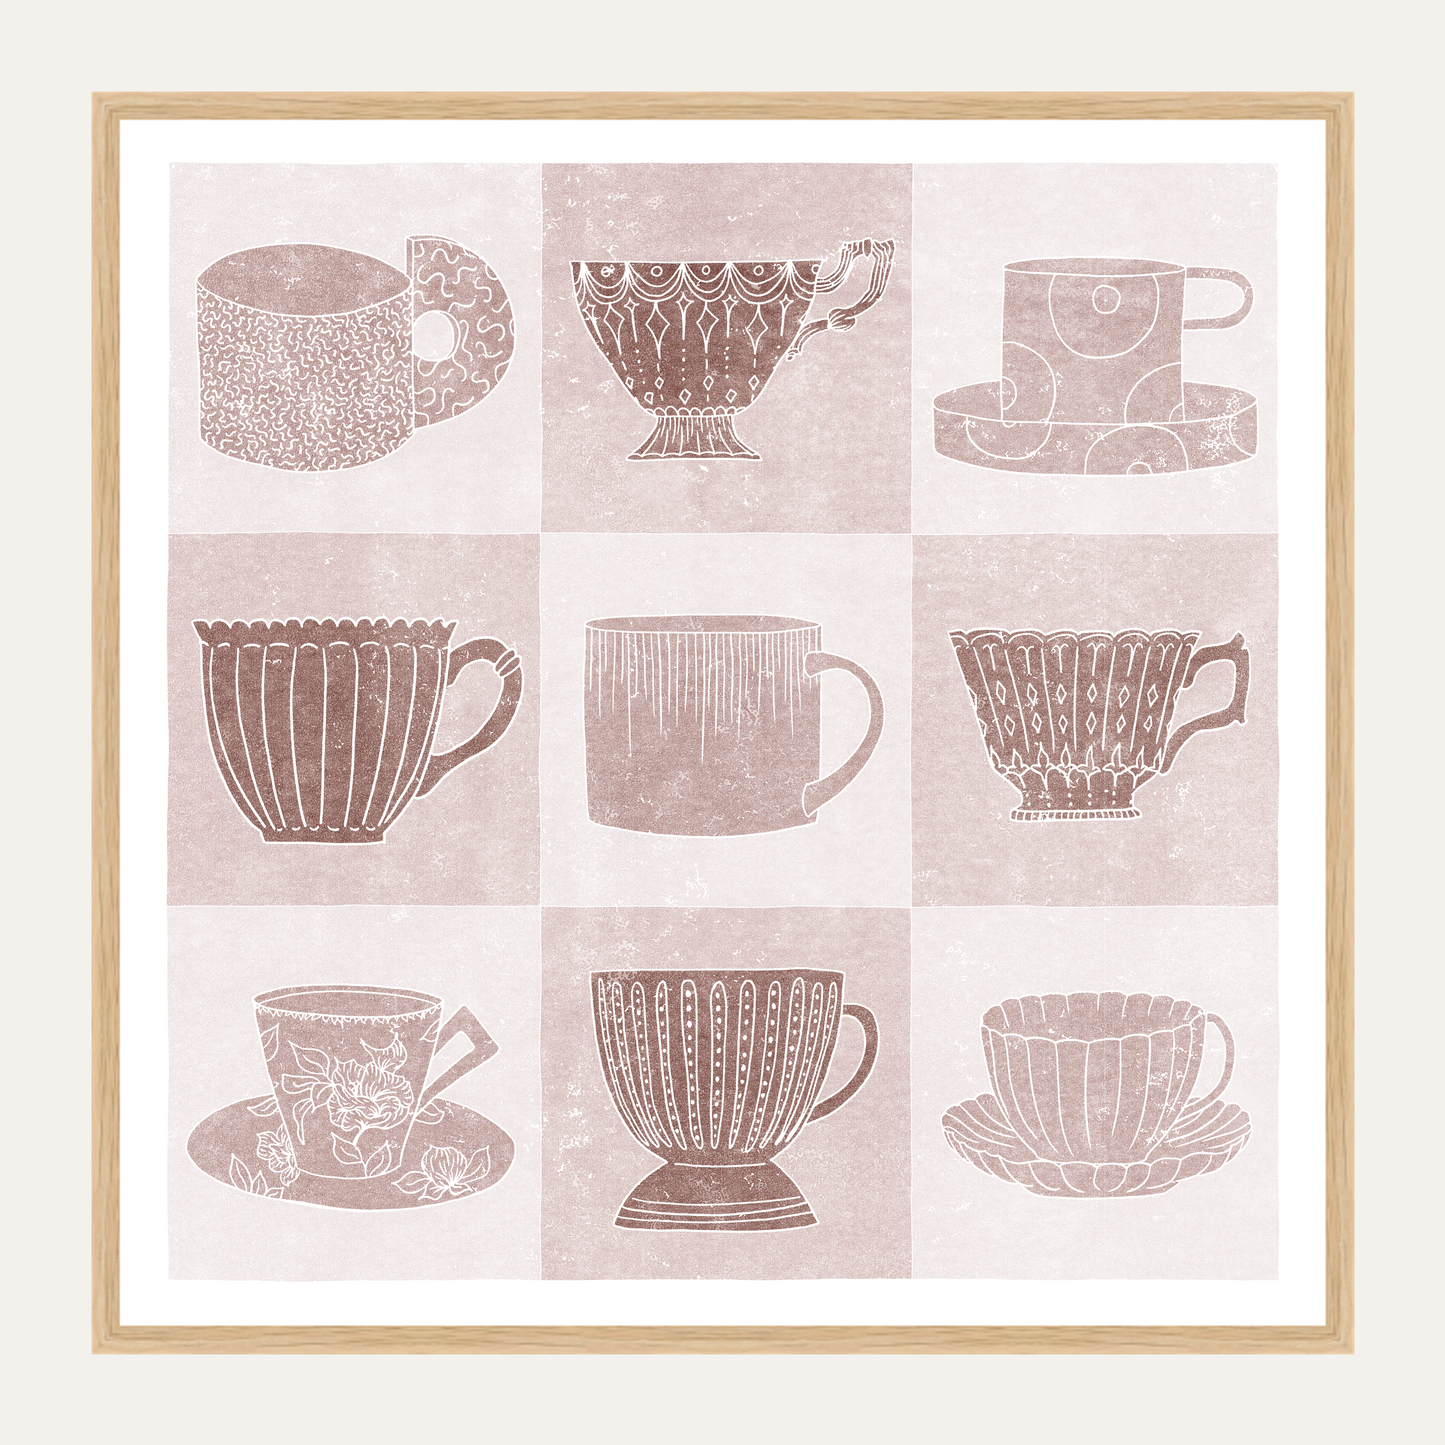 Home Decor Print - Giclee Print - Nature-inspired Prints - Teacups - Framed - Linocut Effect Illustration - Blush Pink